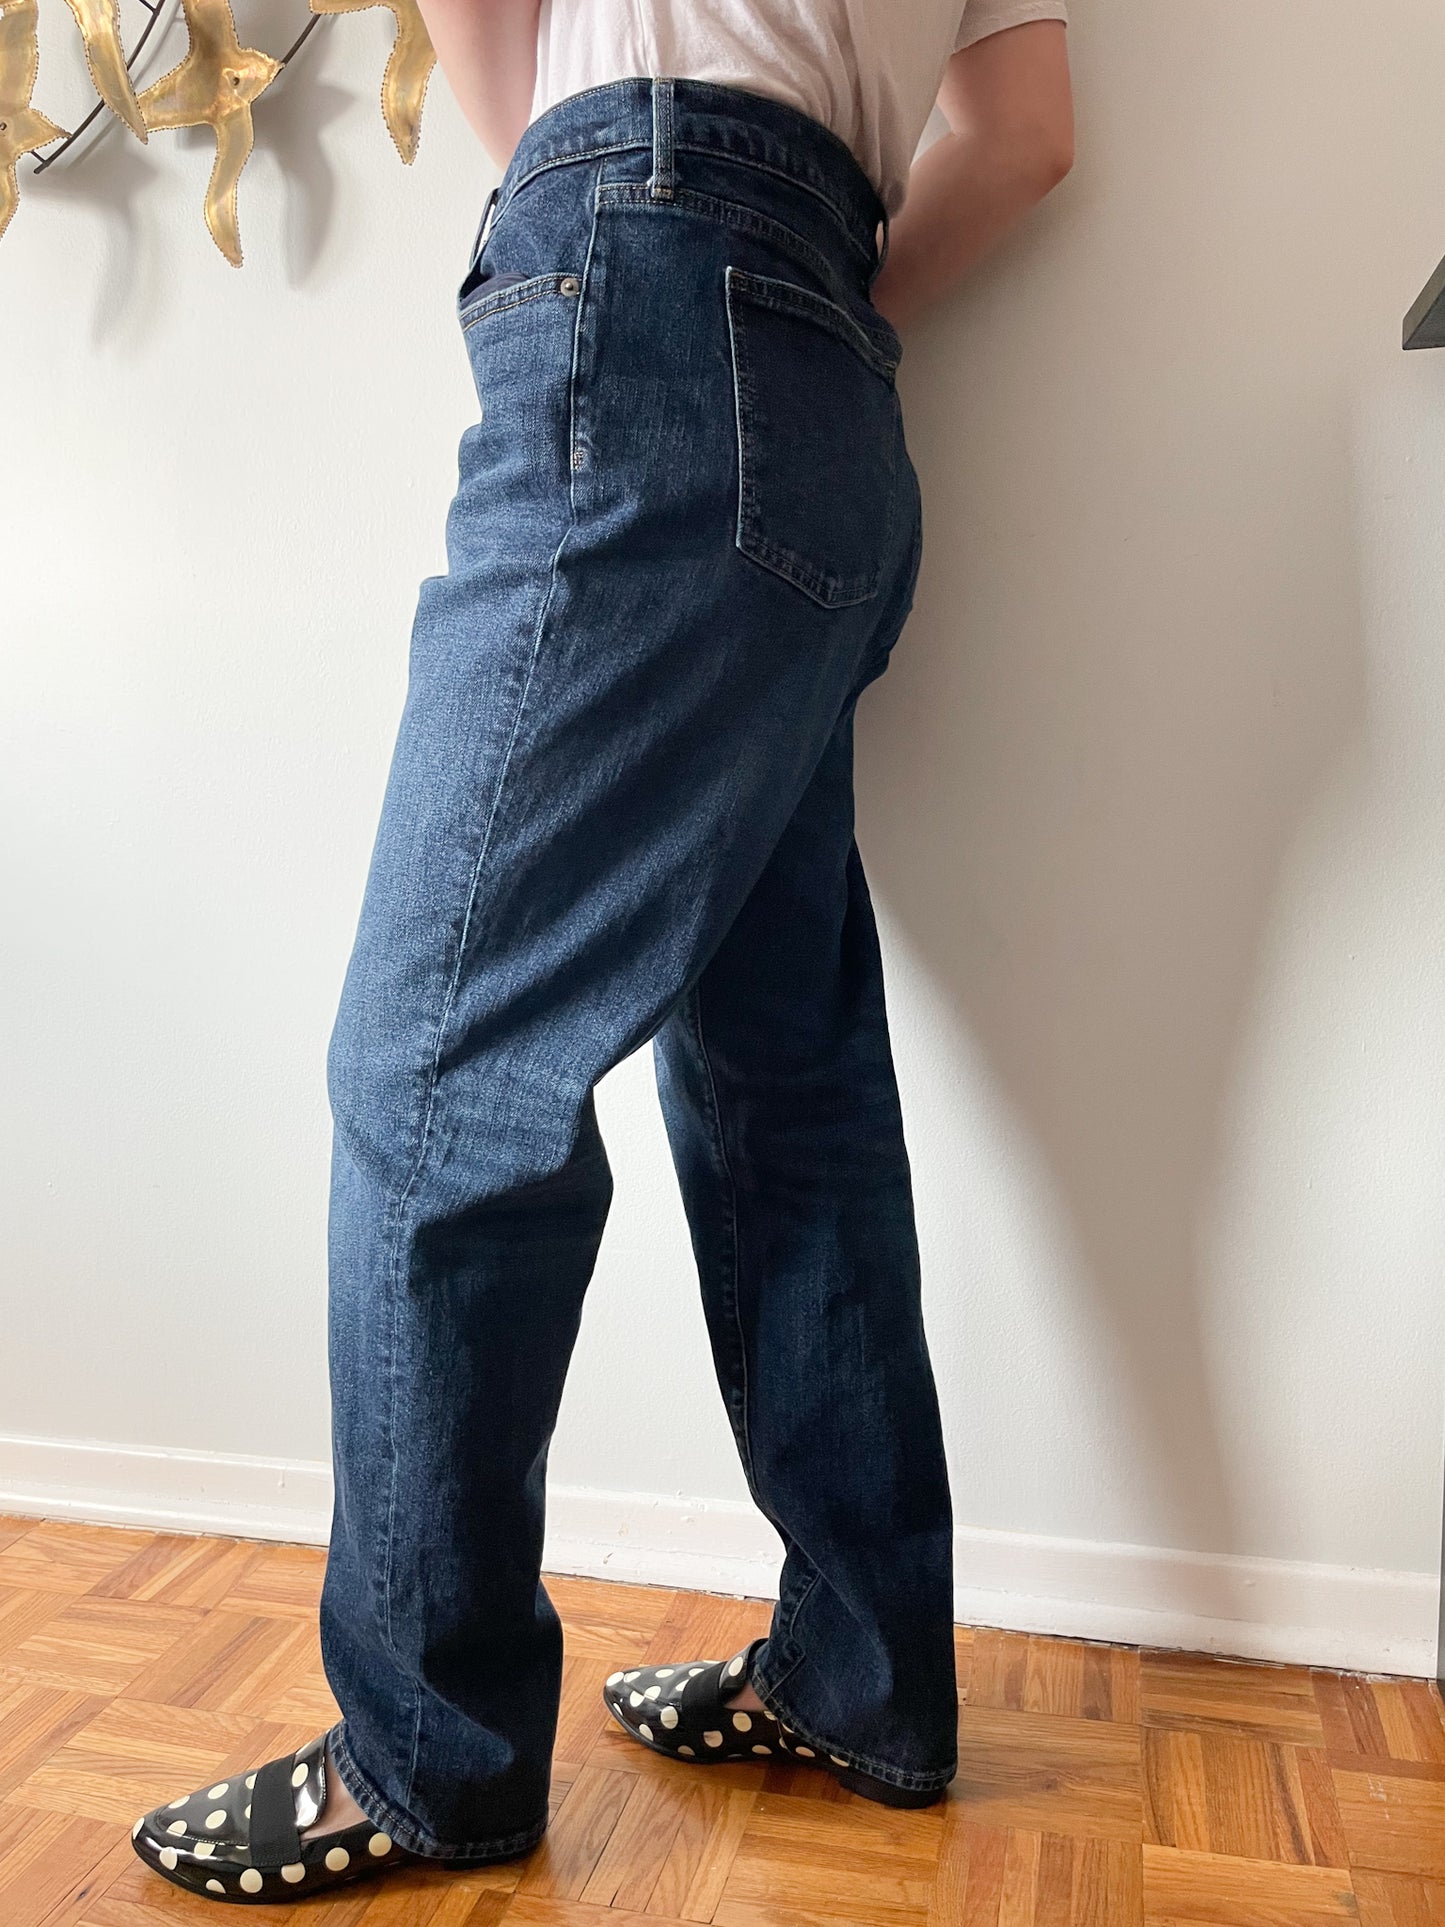 Gap Mid Wash High Rise Slim Cut Jeans - Size 16